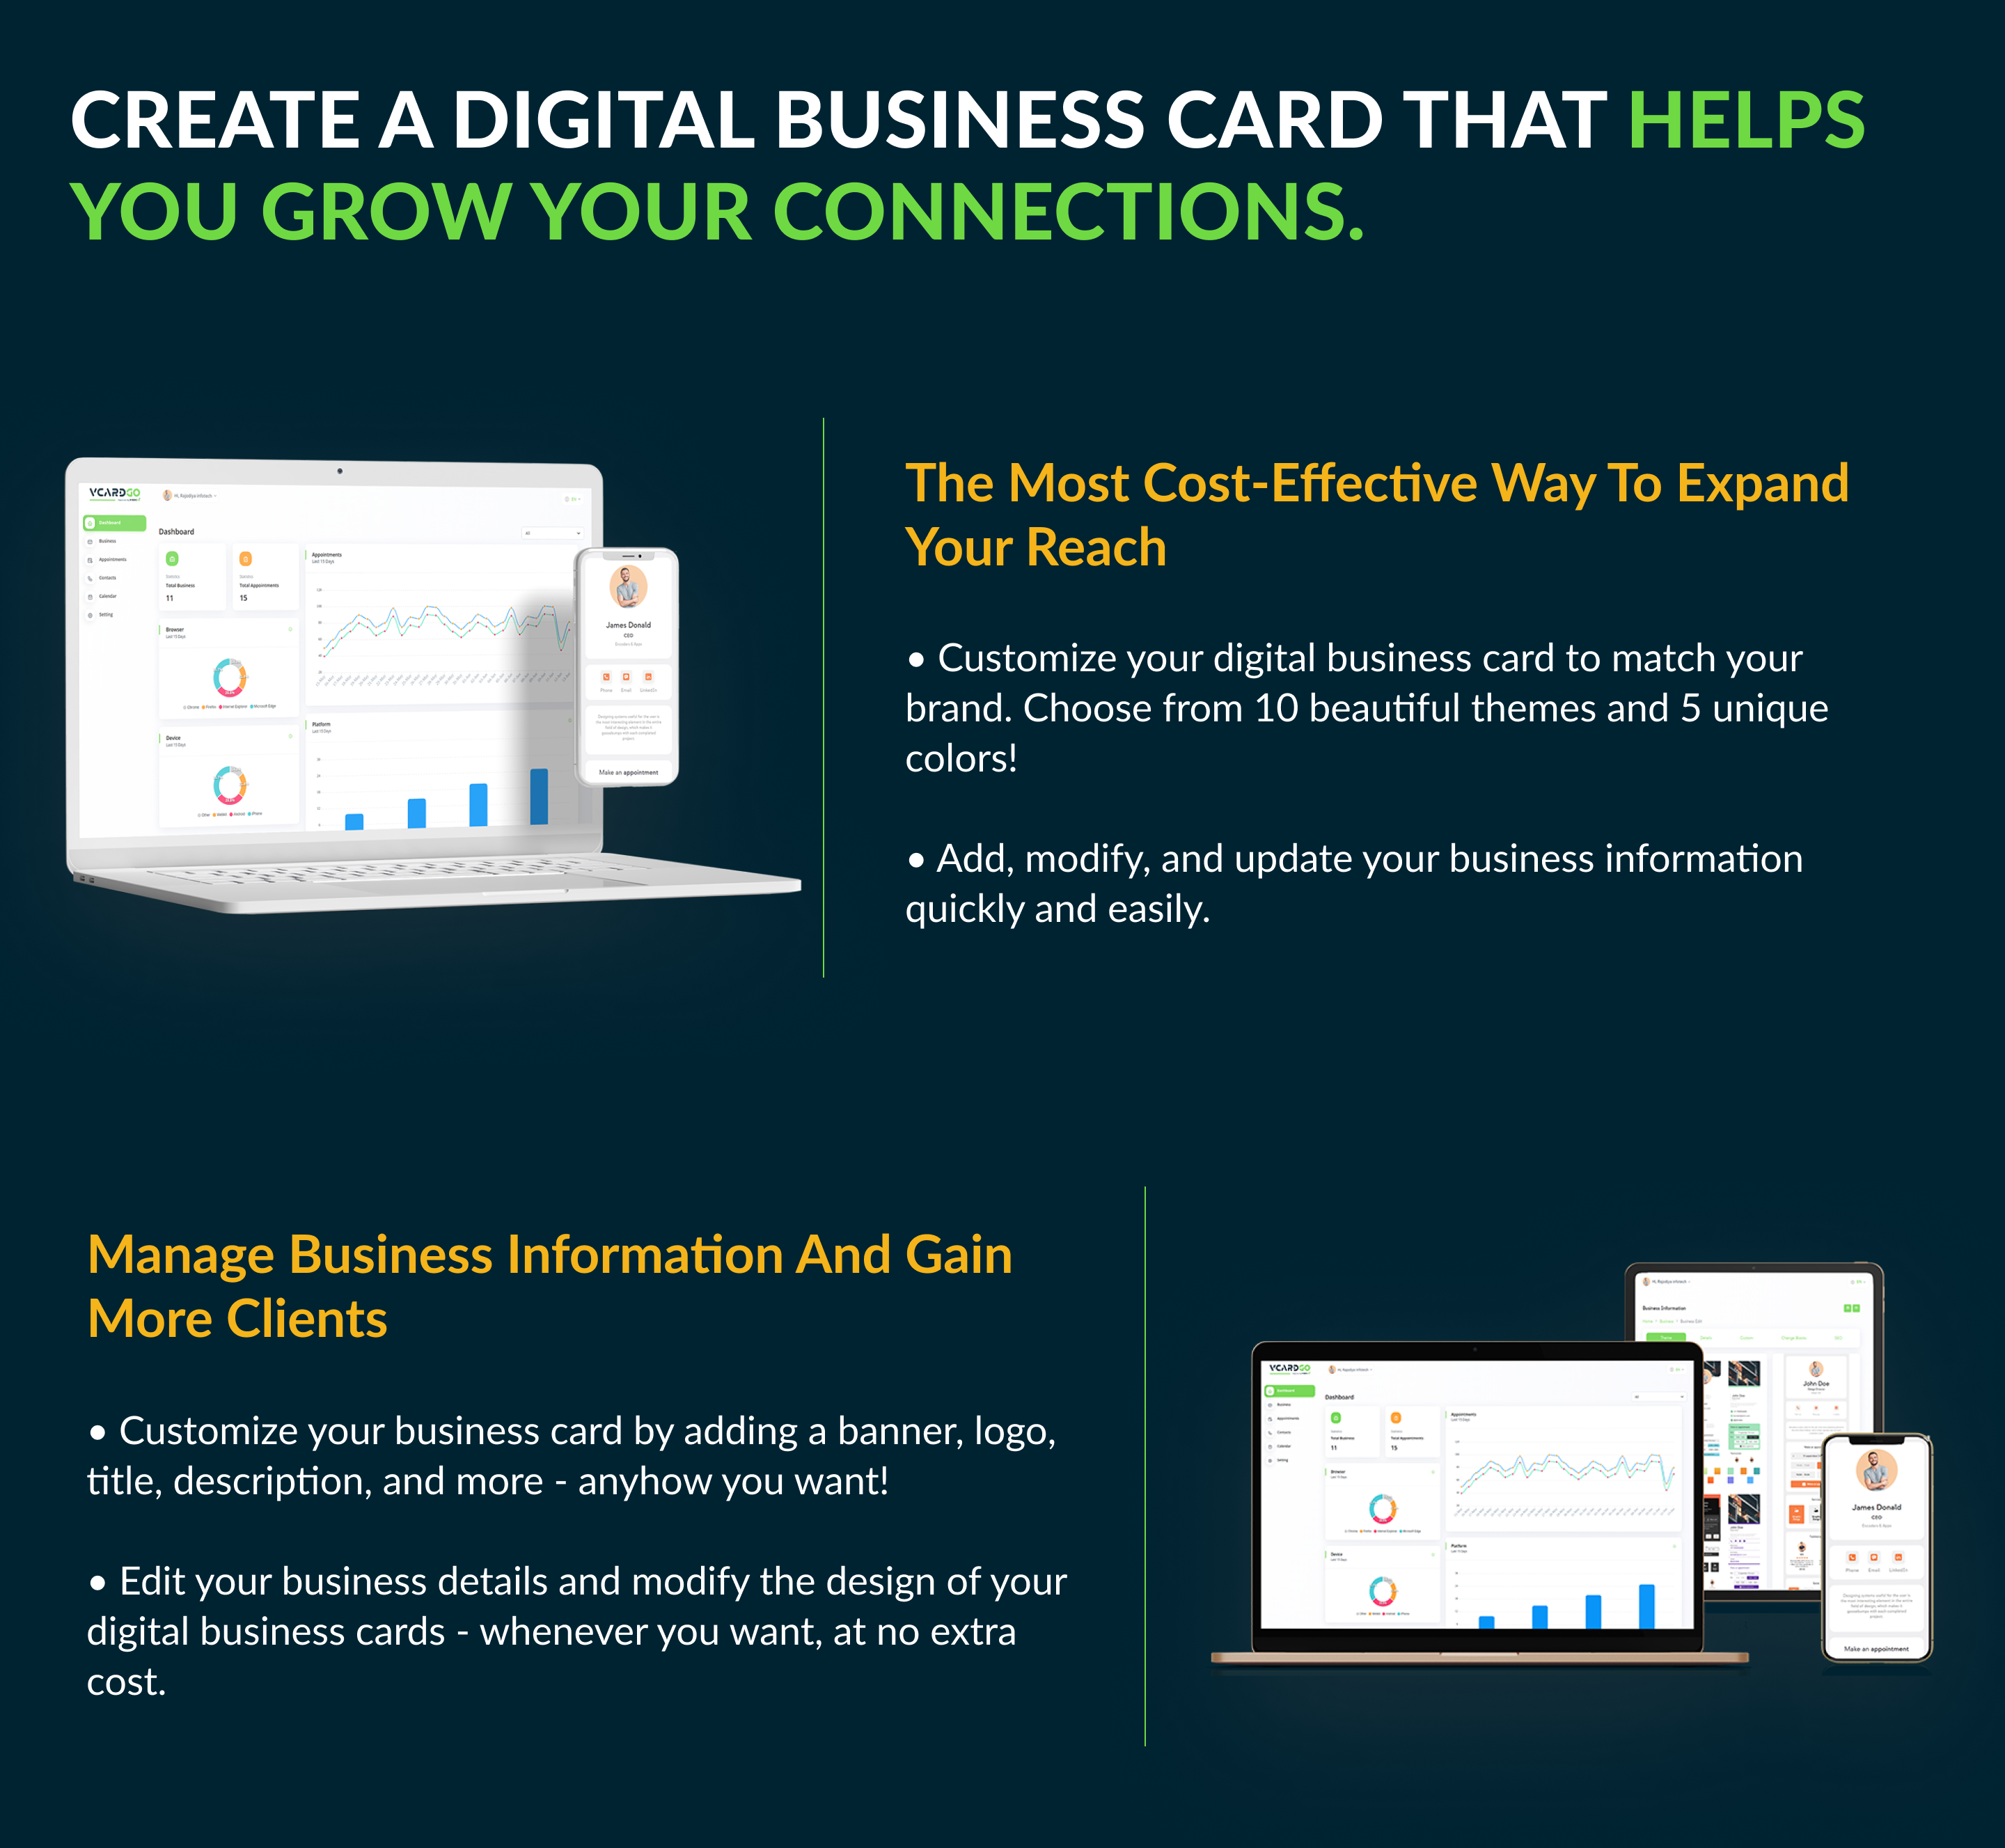 vCardGo SaaS - Digital Business Card Builder - 15